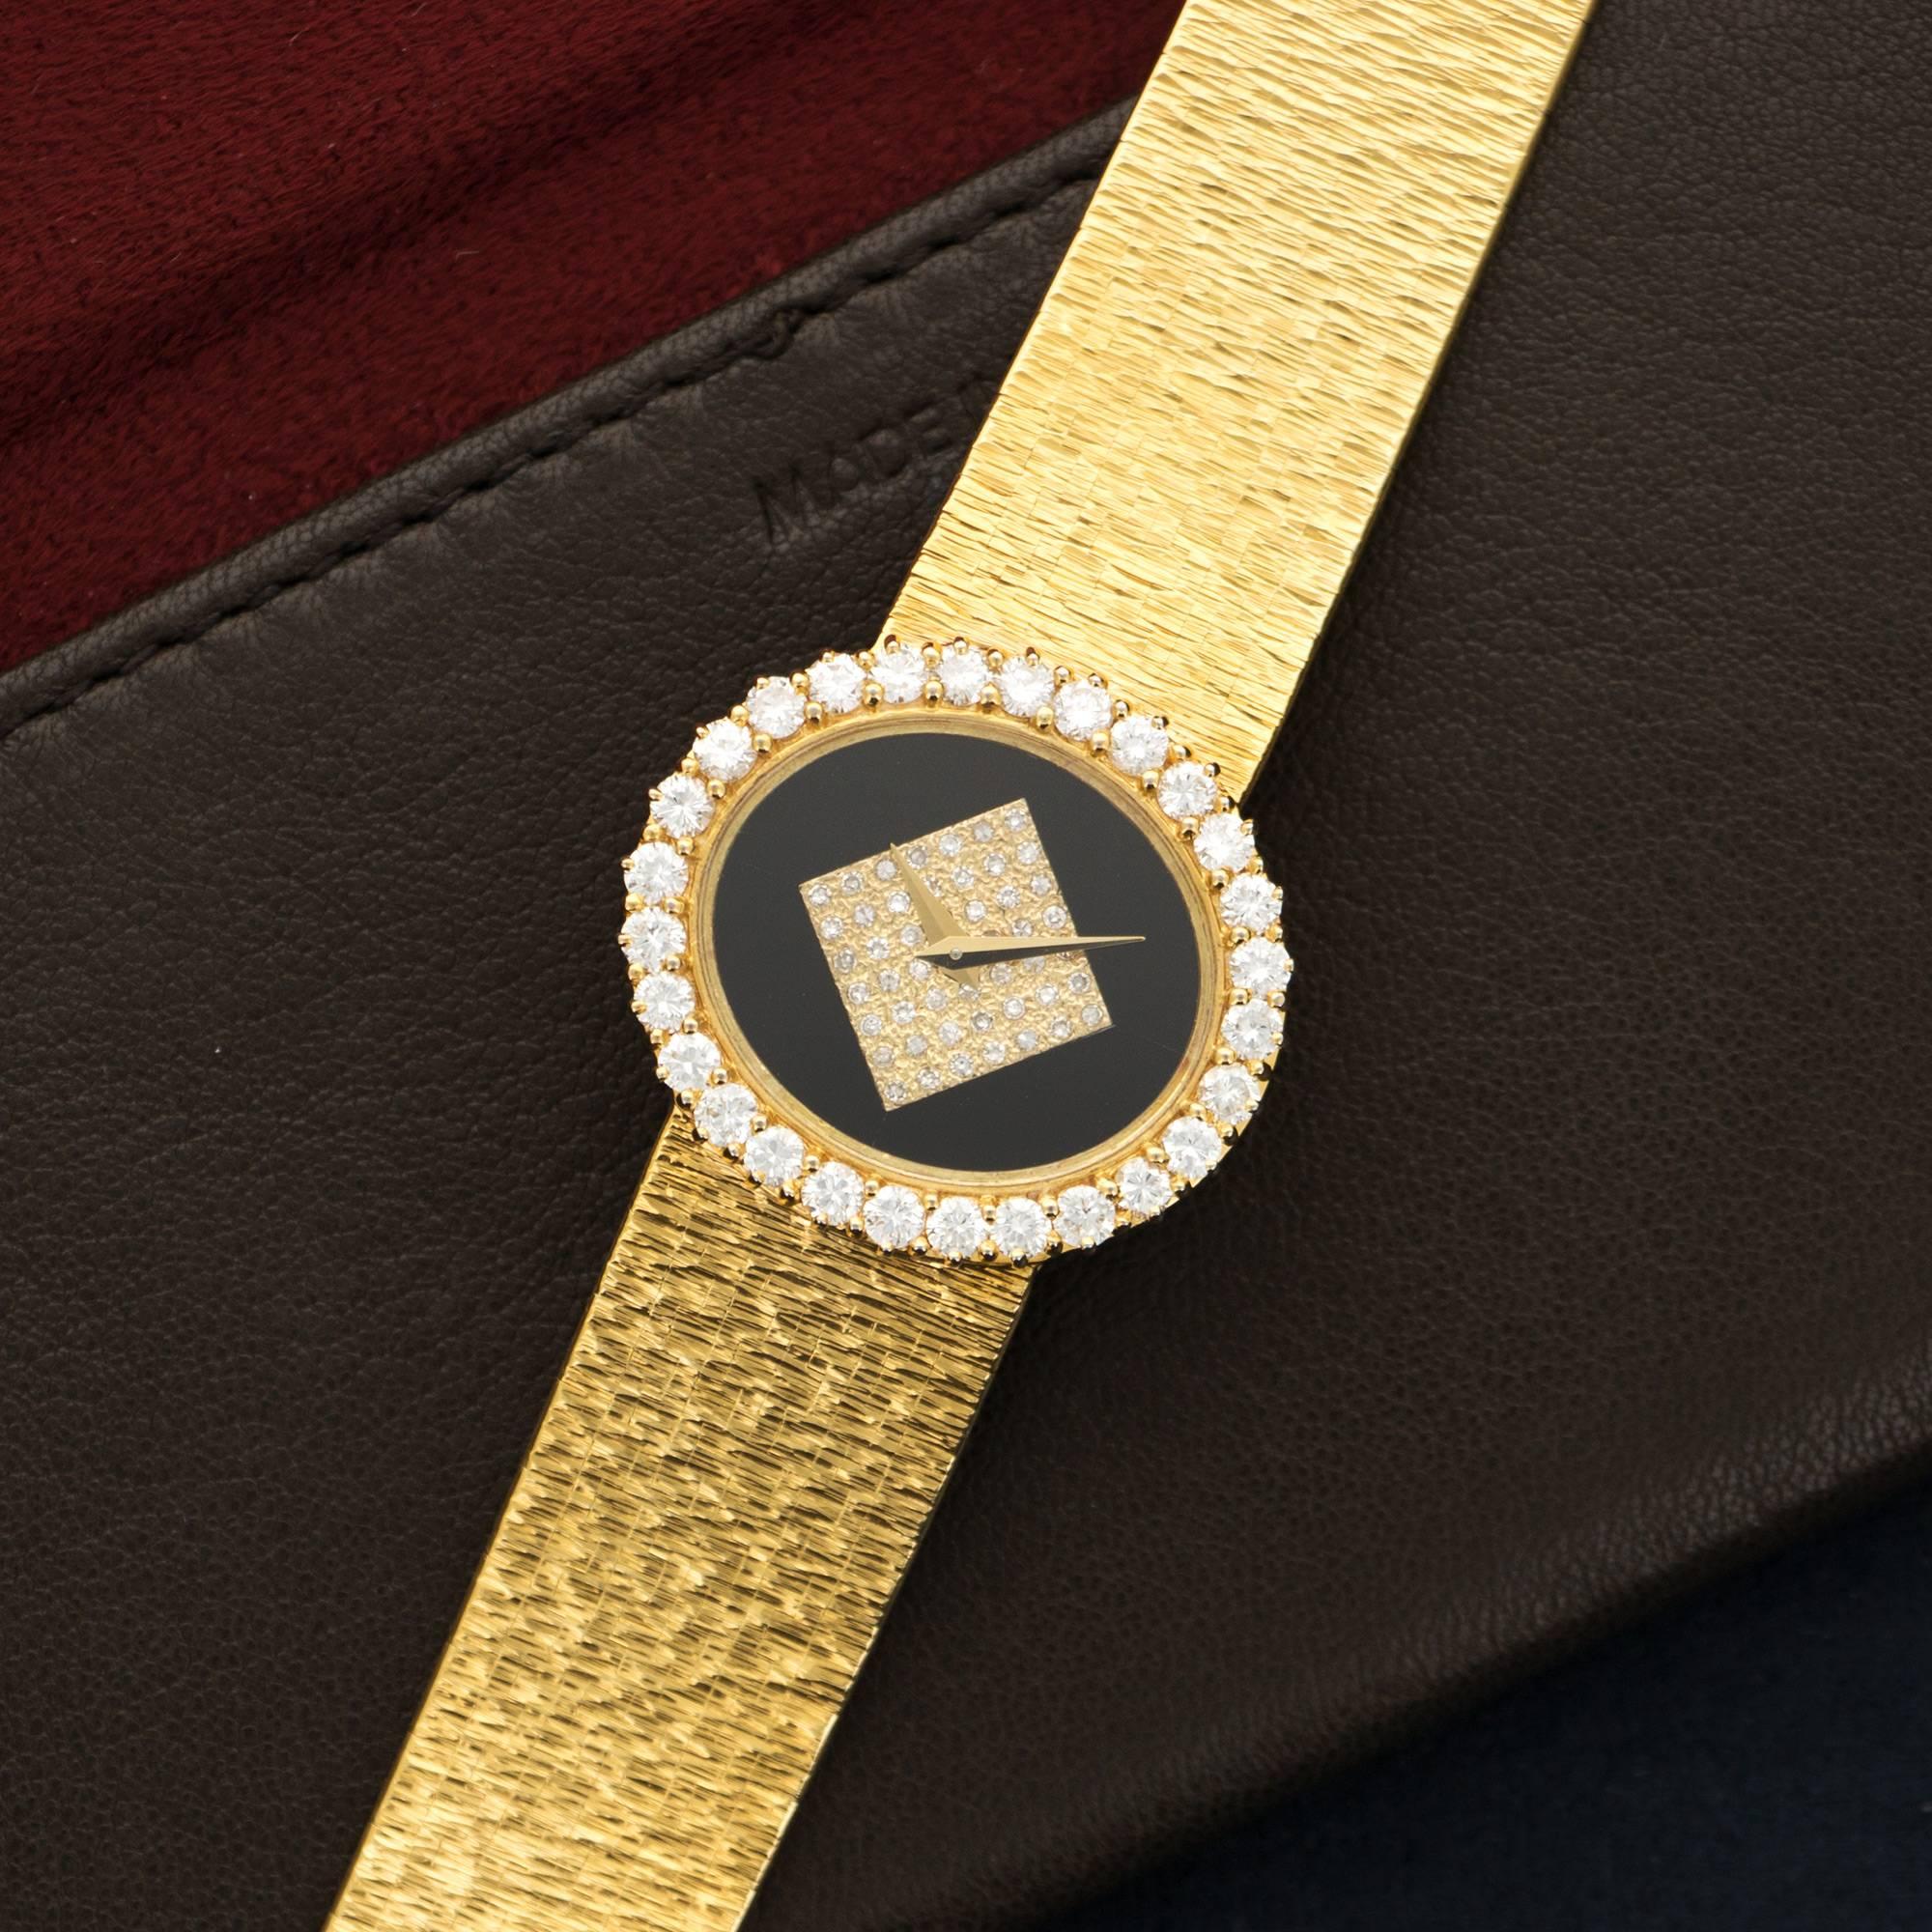 An 18k Yellow Gold Pave Diamond & Onyx Watch by Piaget. Circa 1970's. All Original. 